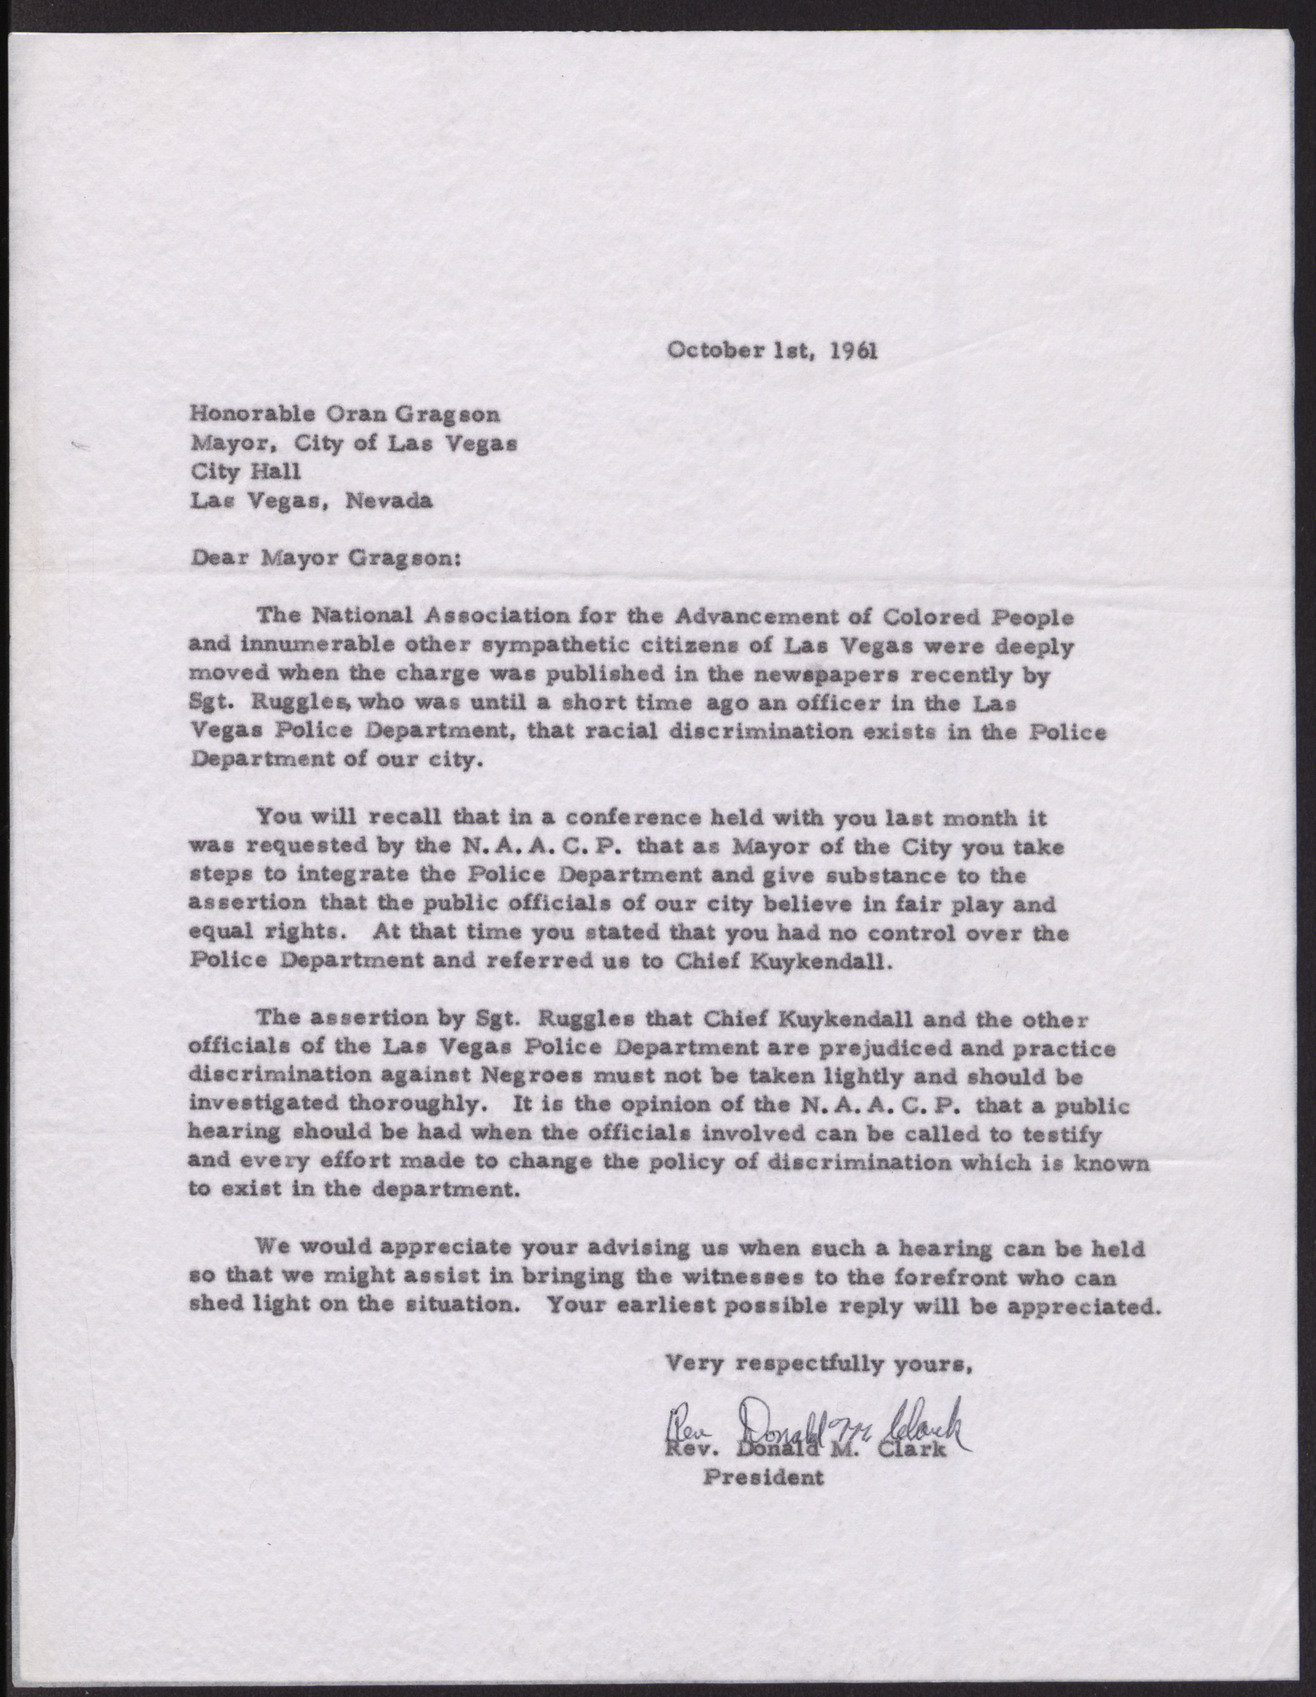 Letter to Mayor Oran Gragson from Rev. Donald M. Clark, October 1, 1961